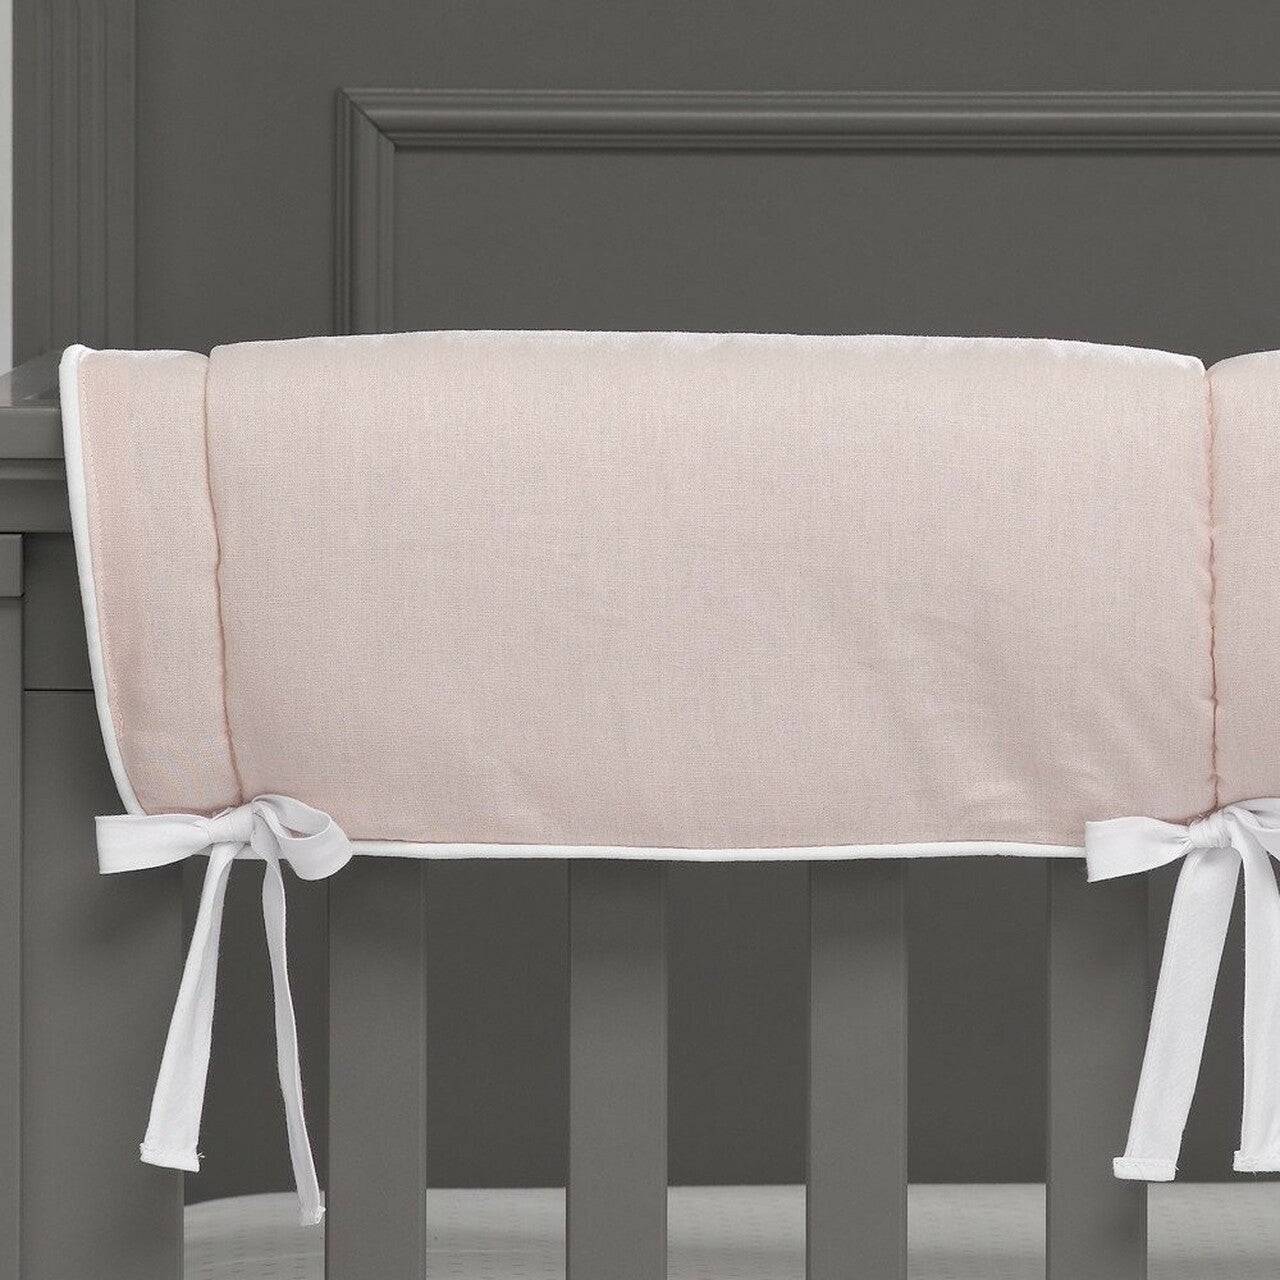 Light Pink Linen Crib Guard Rail Cover - Twinkle Twinkle Little One